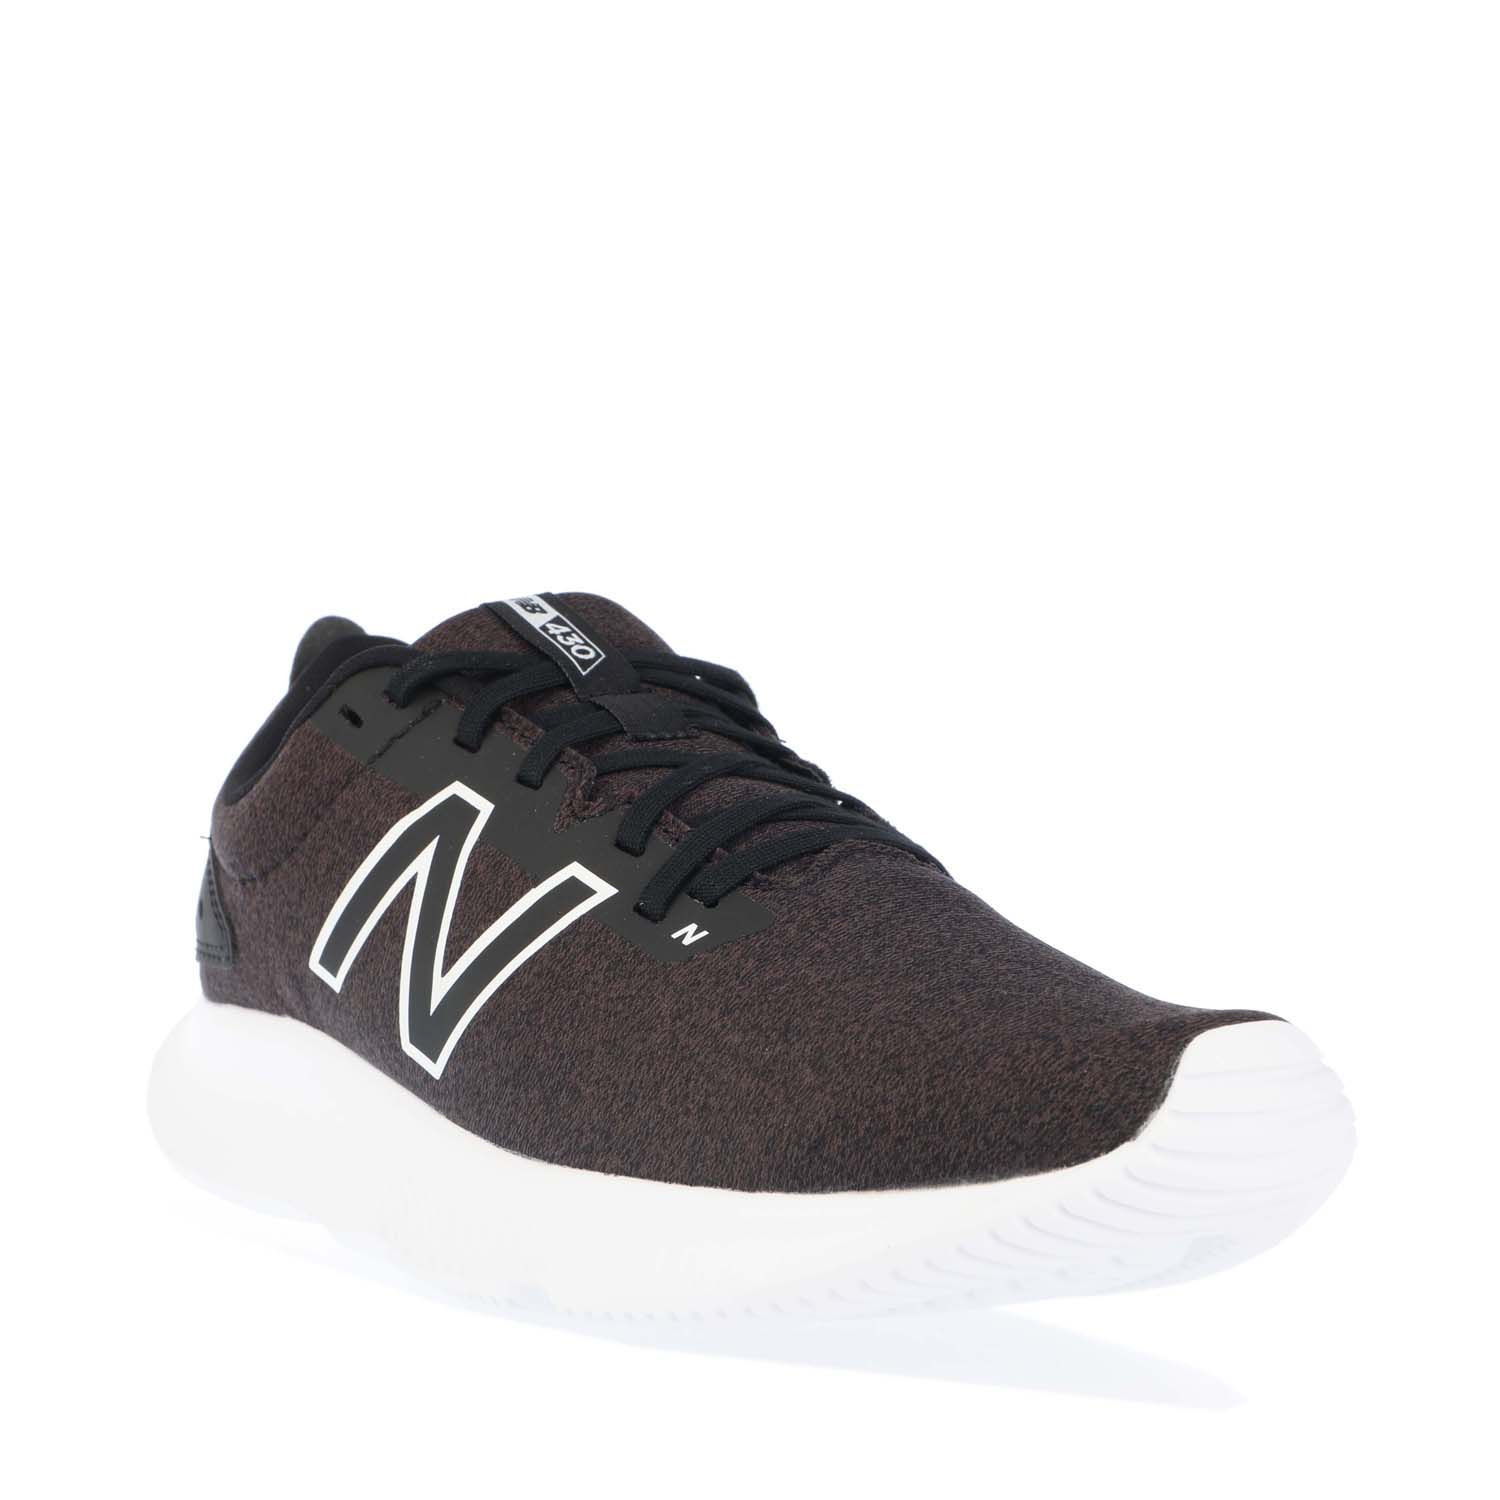 Black New Balance Mens 430v2 Running Shoes - Get The Label